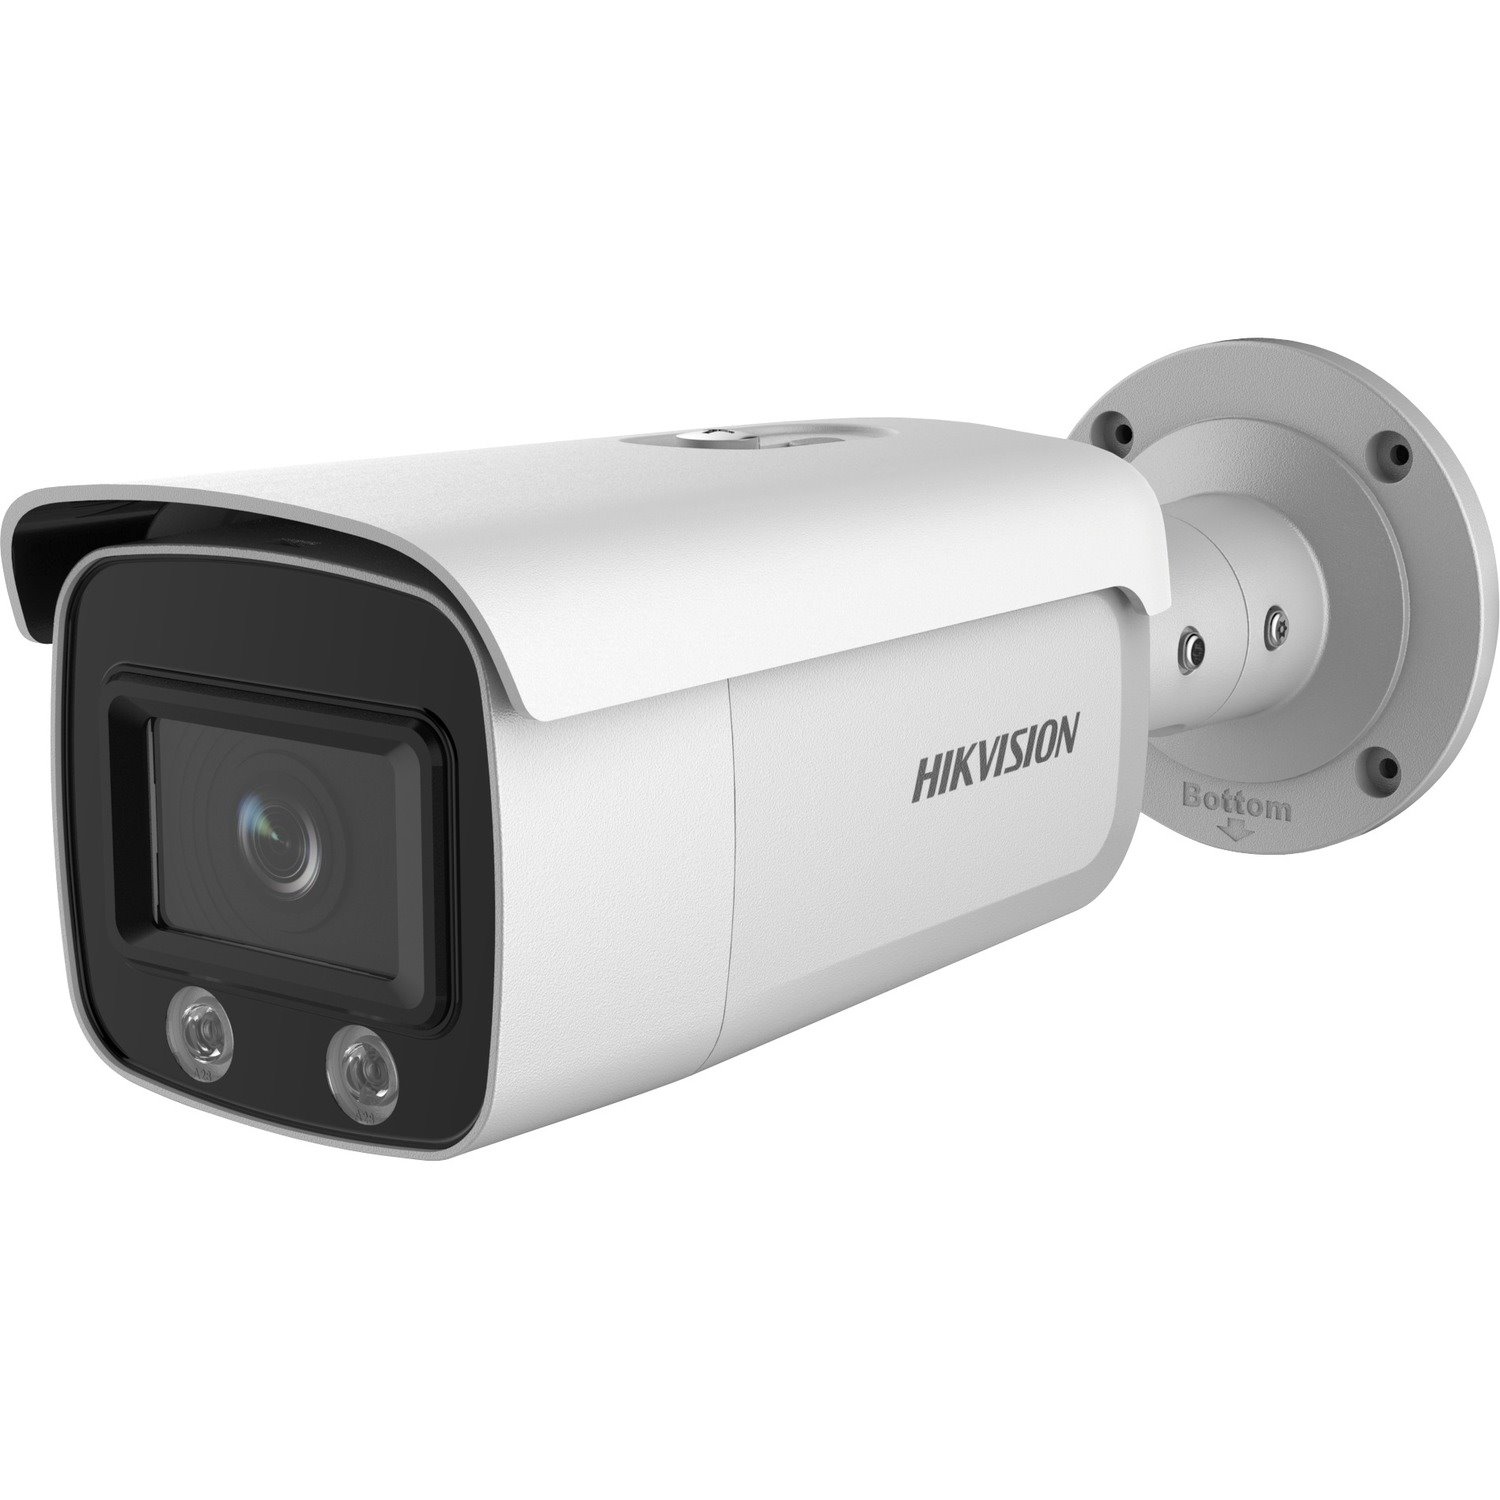 Hikvision EasyIP 4.0 DS-2CD2T47G1-L 4 Megapixel Outdoor HD Network Camera - Color - Bullet